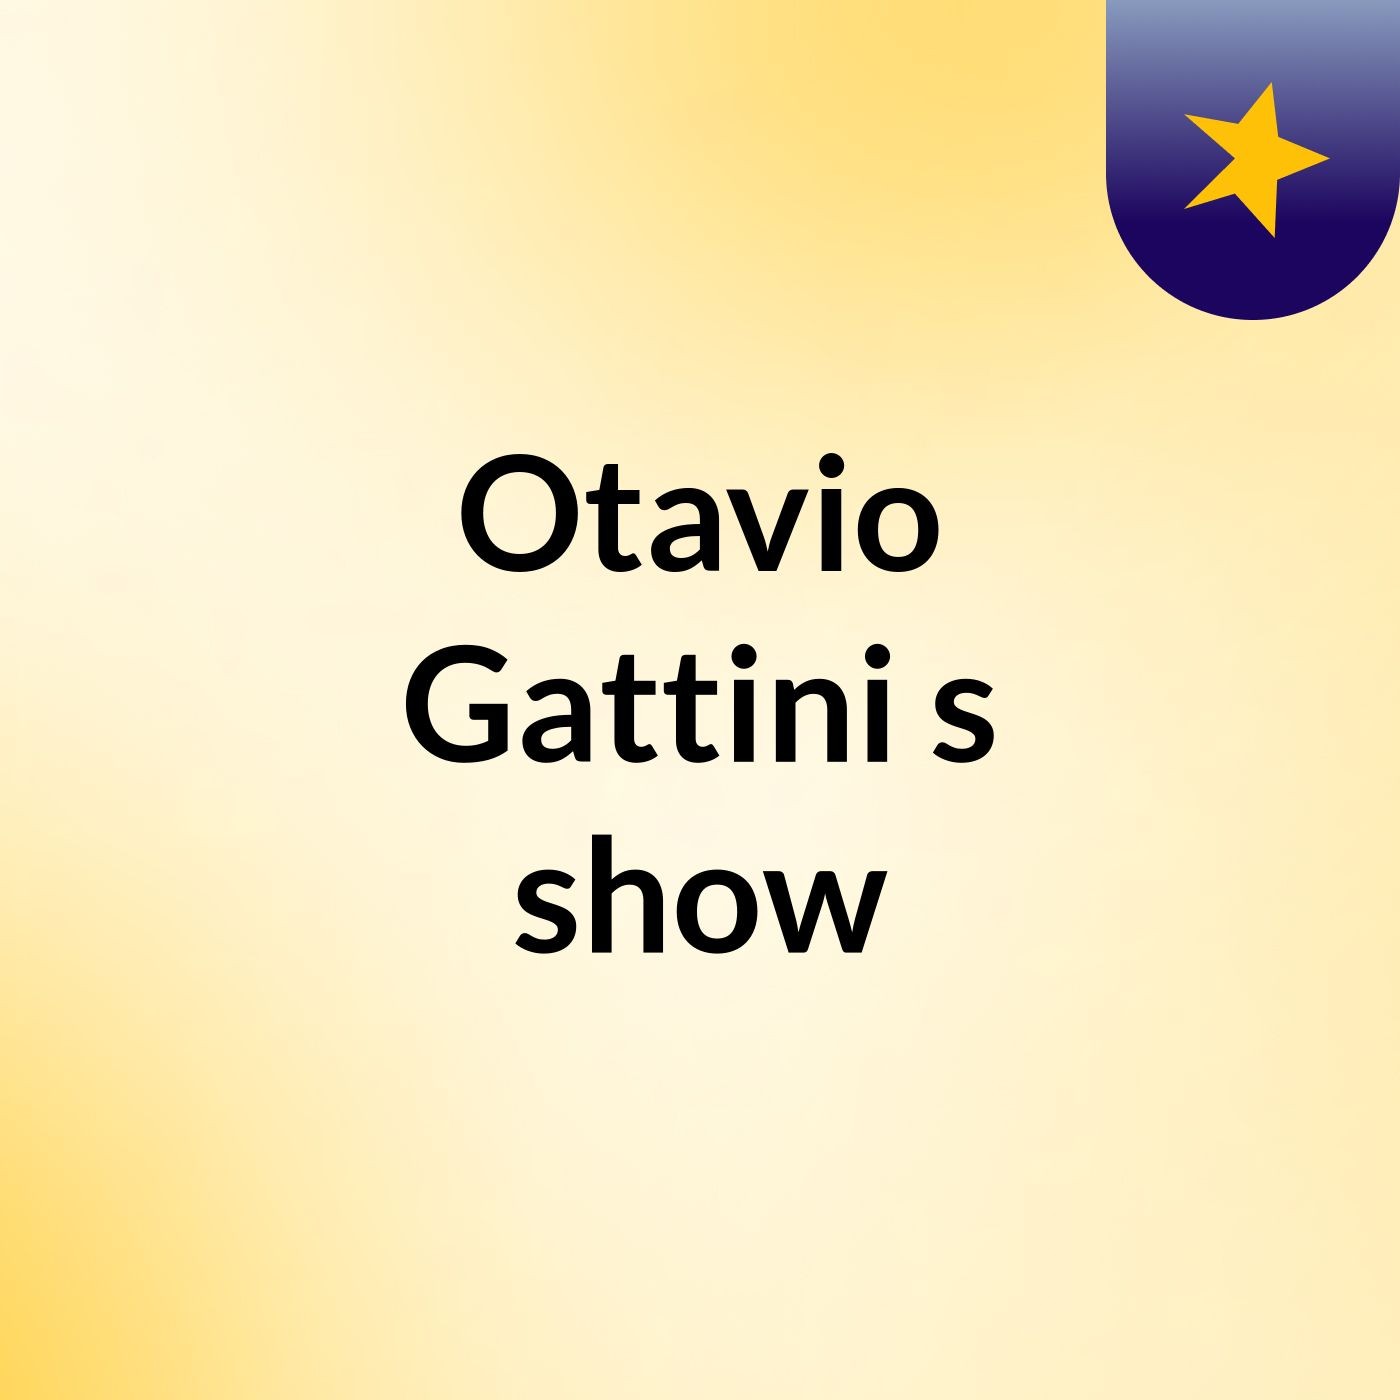 Otavio Gattini's show